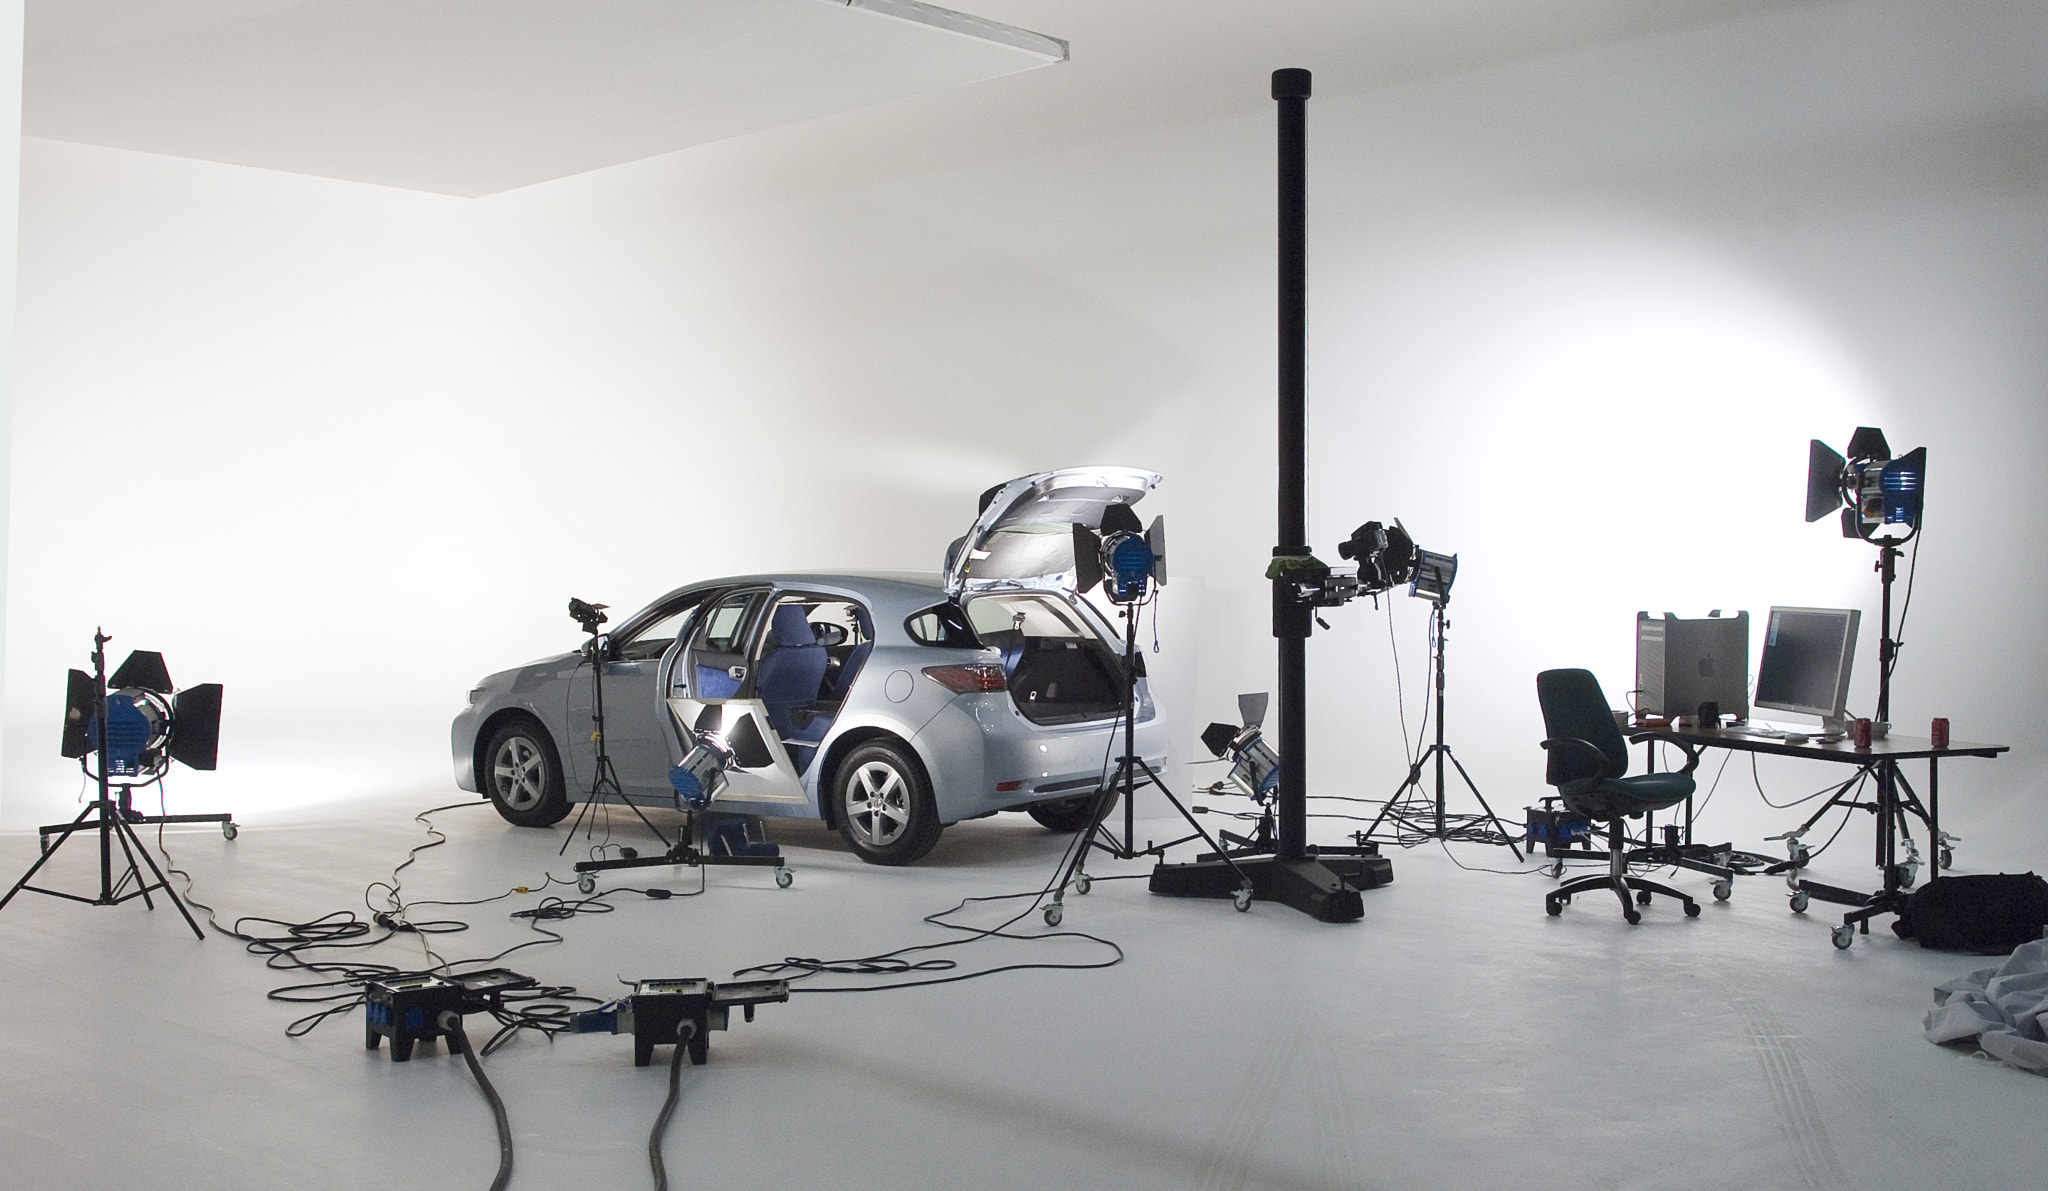 Shooting interior car in studio